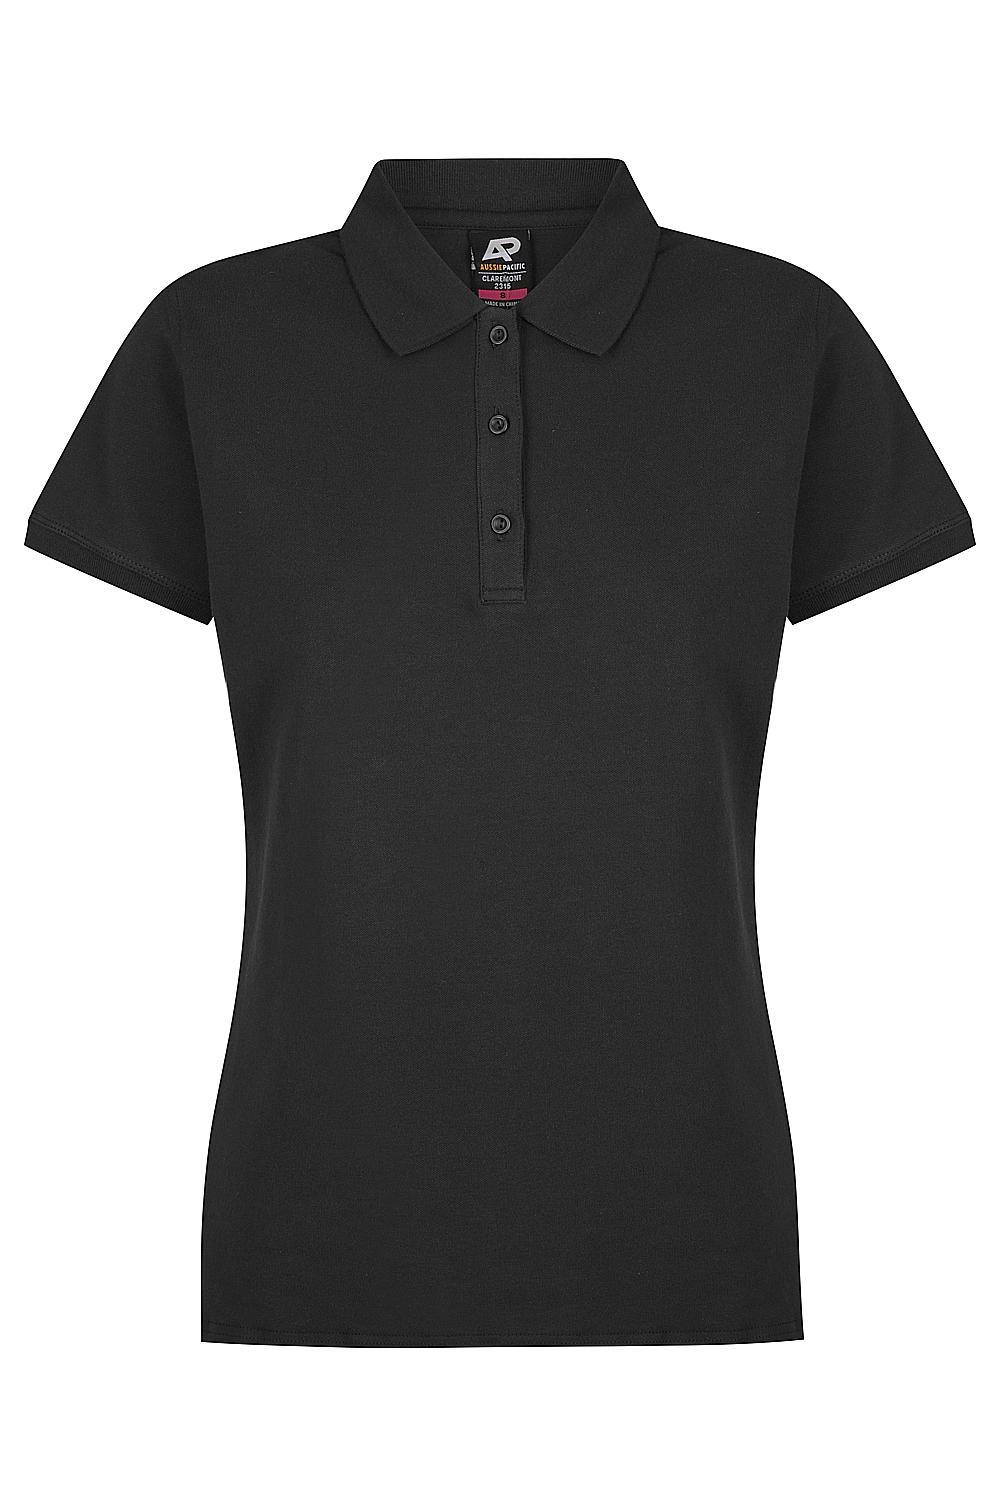 Custom Ladies Claremont Work Shirts - Black